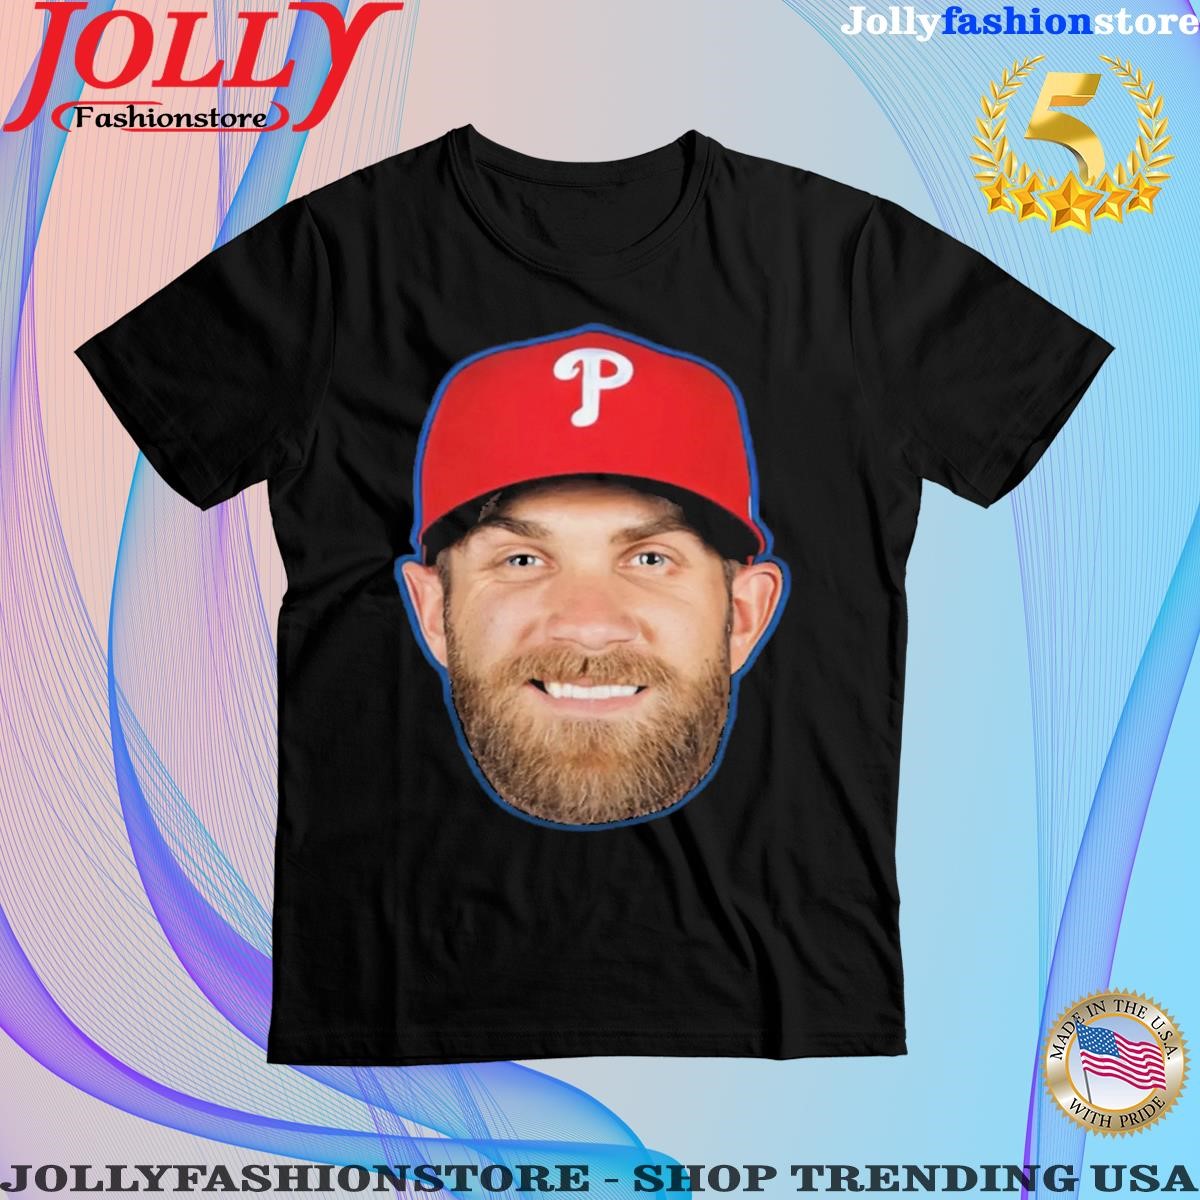 Trending bryce Harper Baseball Player Fan T Shirt